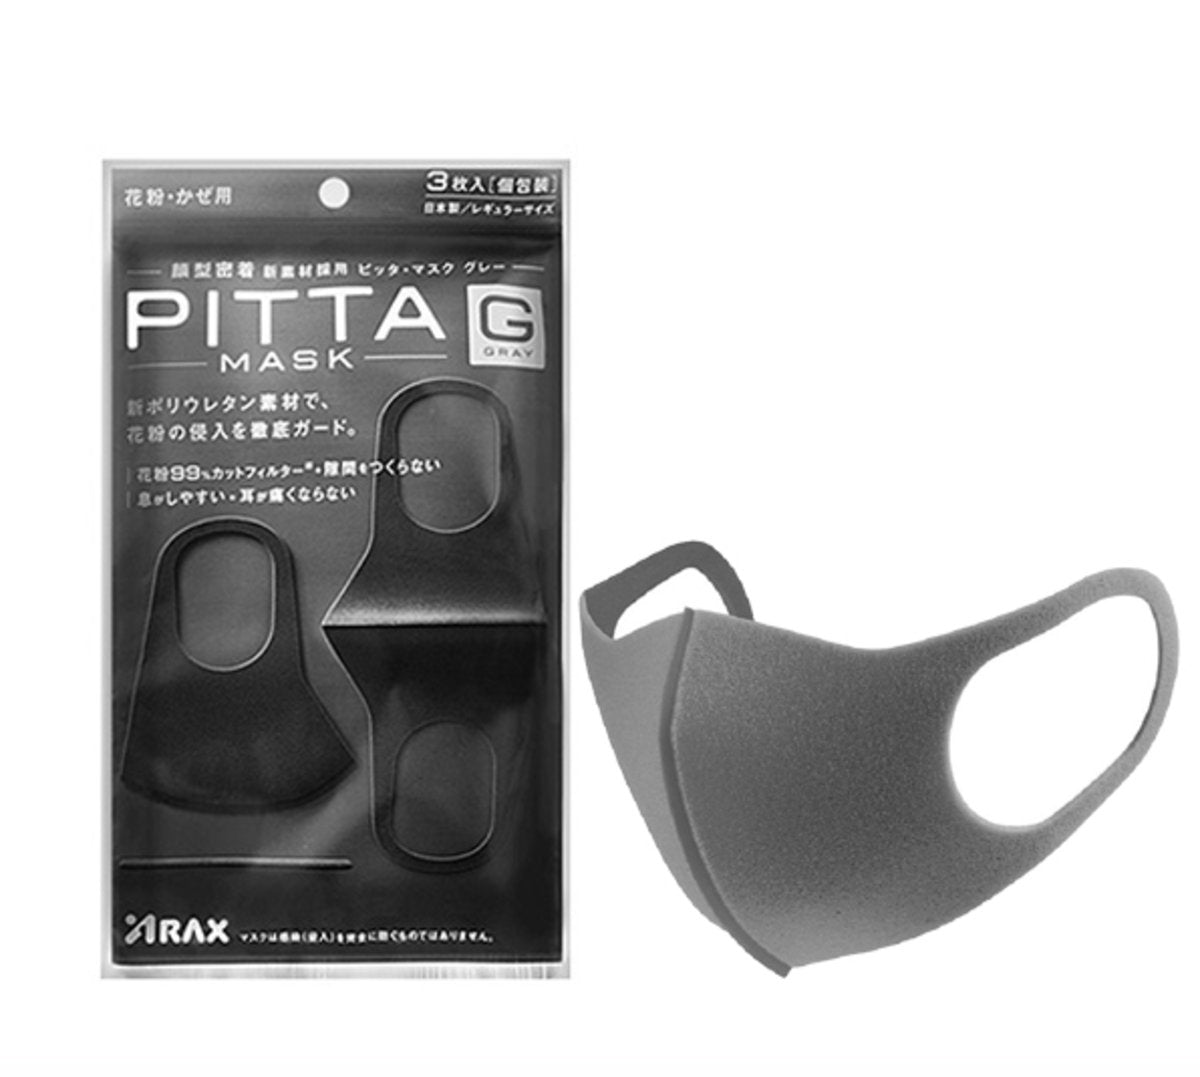 Arax Pitta Mask Anti-pollution Face Mask 3pks Made in Japan AU Stock